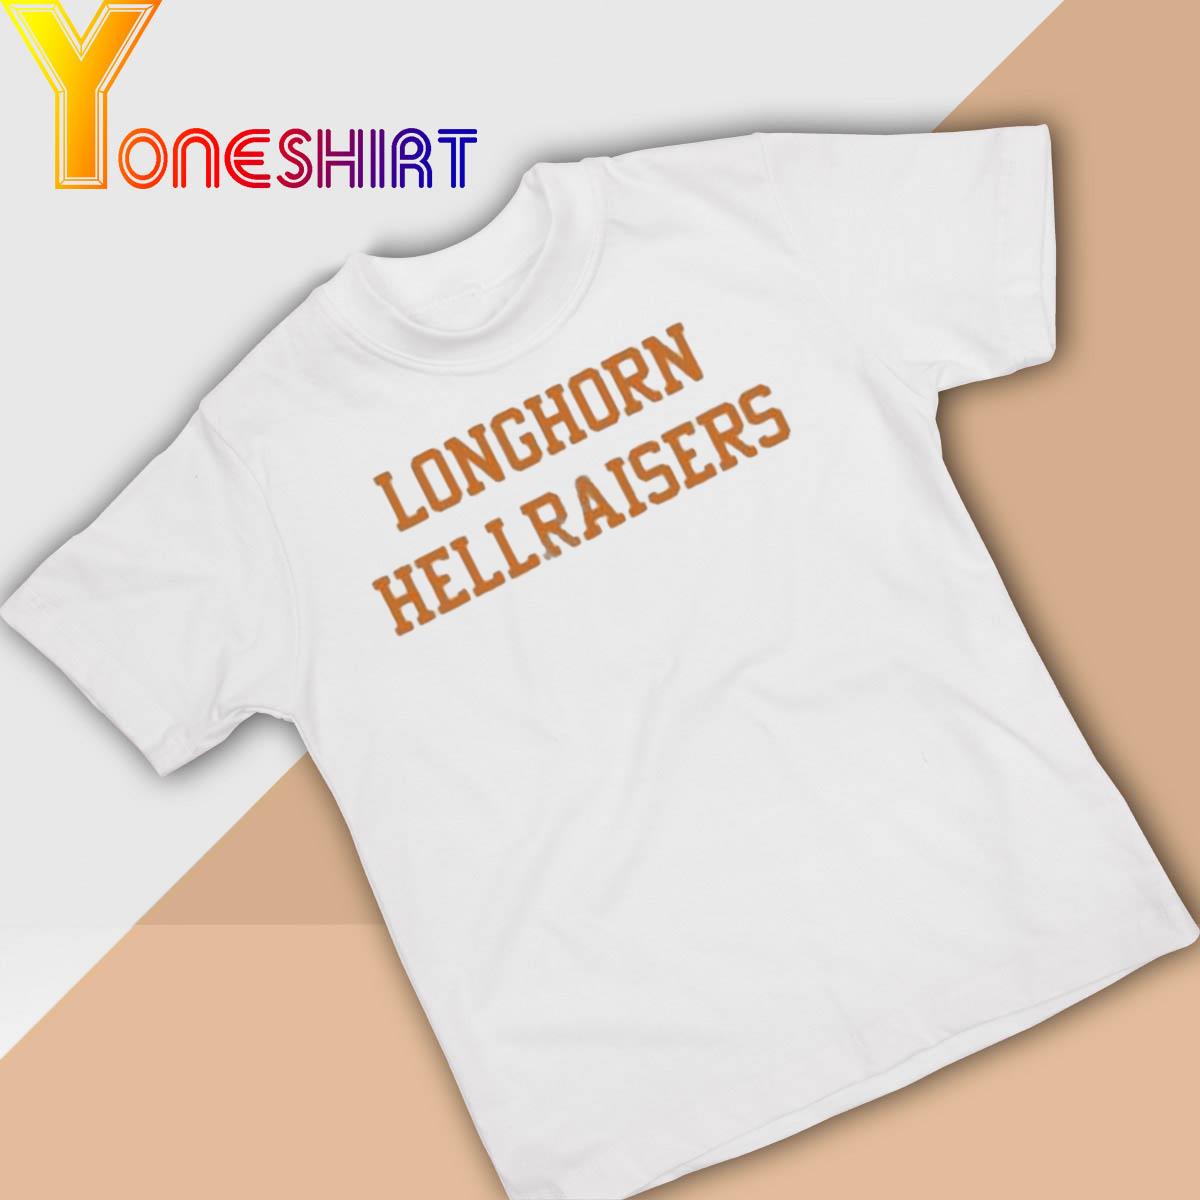 Longhorn Hellraisers Shirt